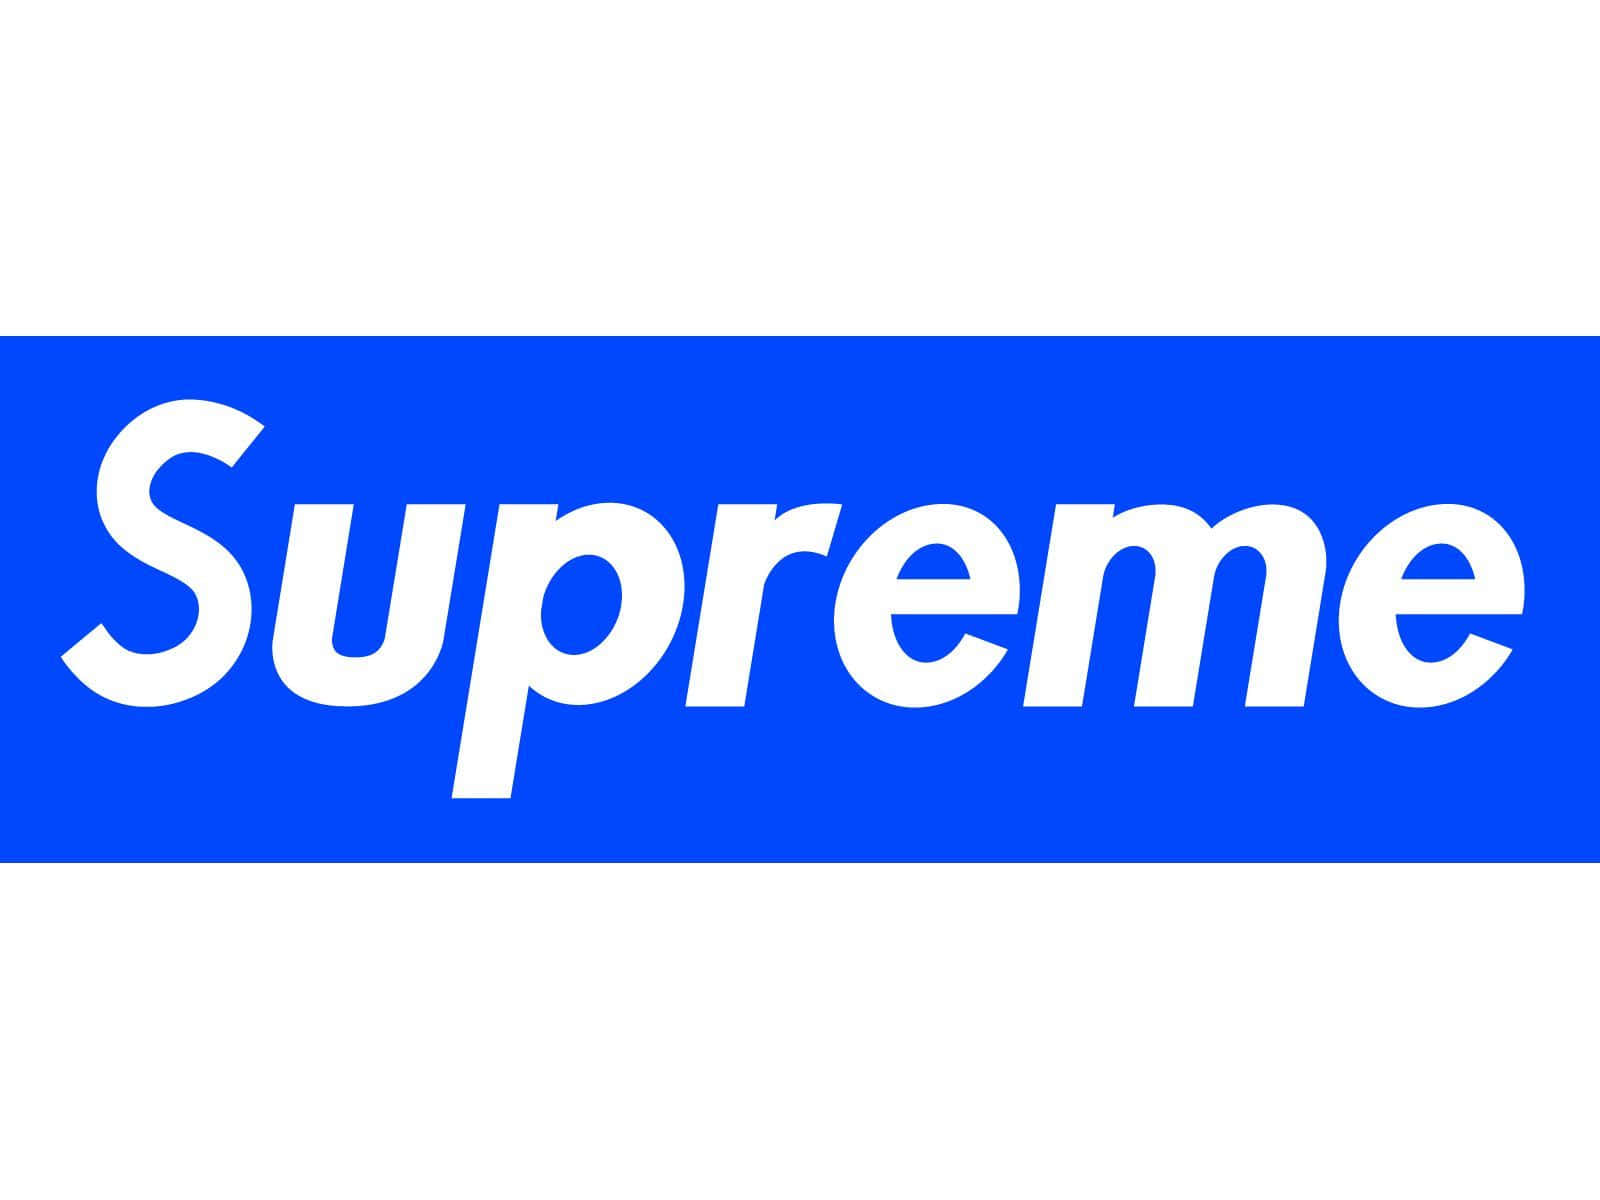 Supreme Logo On A Blue Background Wallpaper